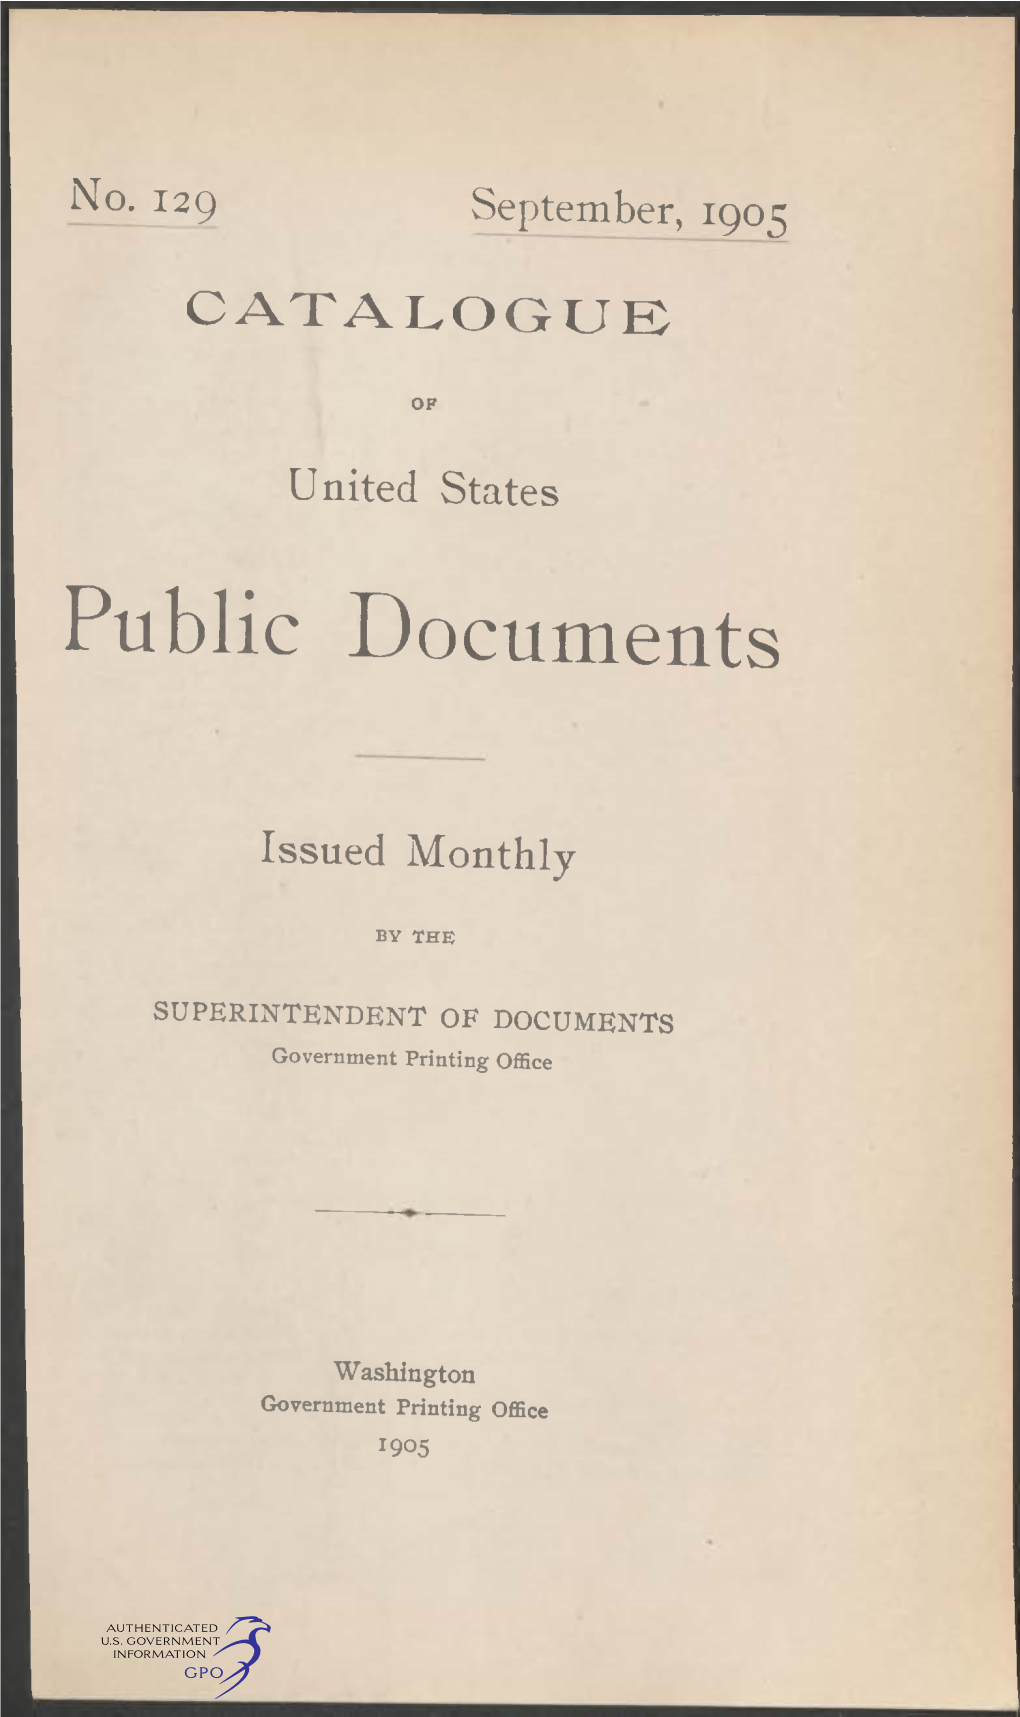 Catalogue of United States Public Documents, September 1905